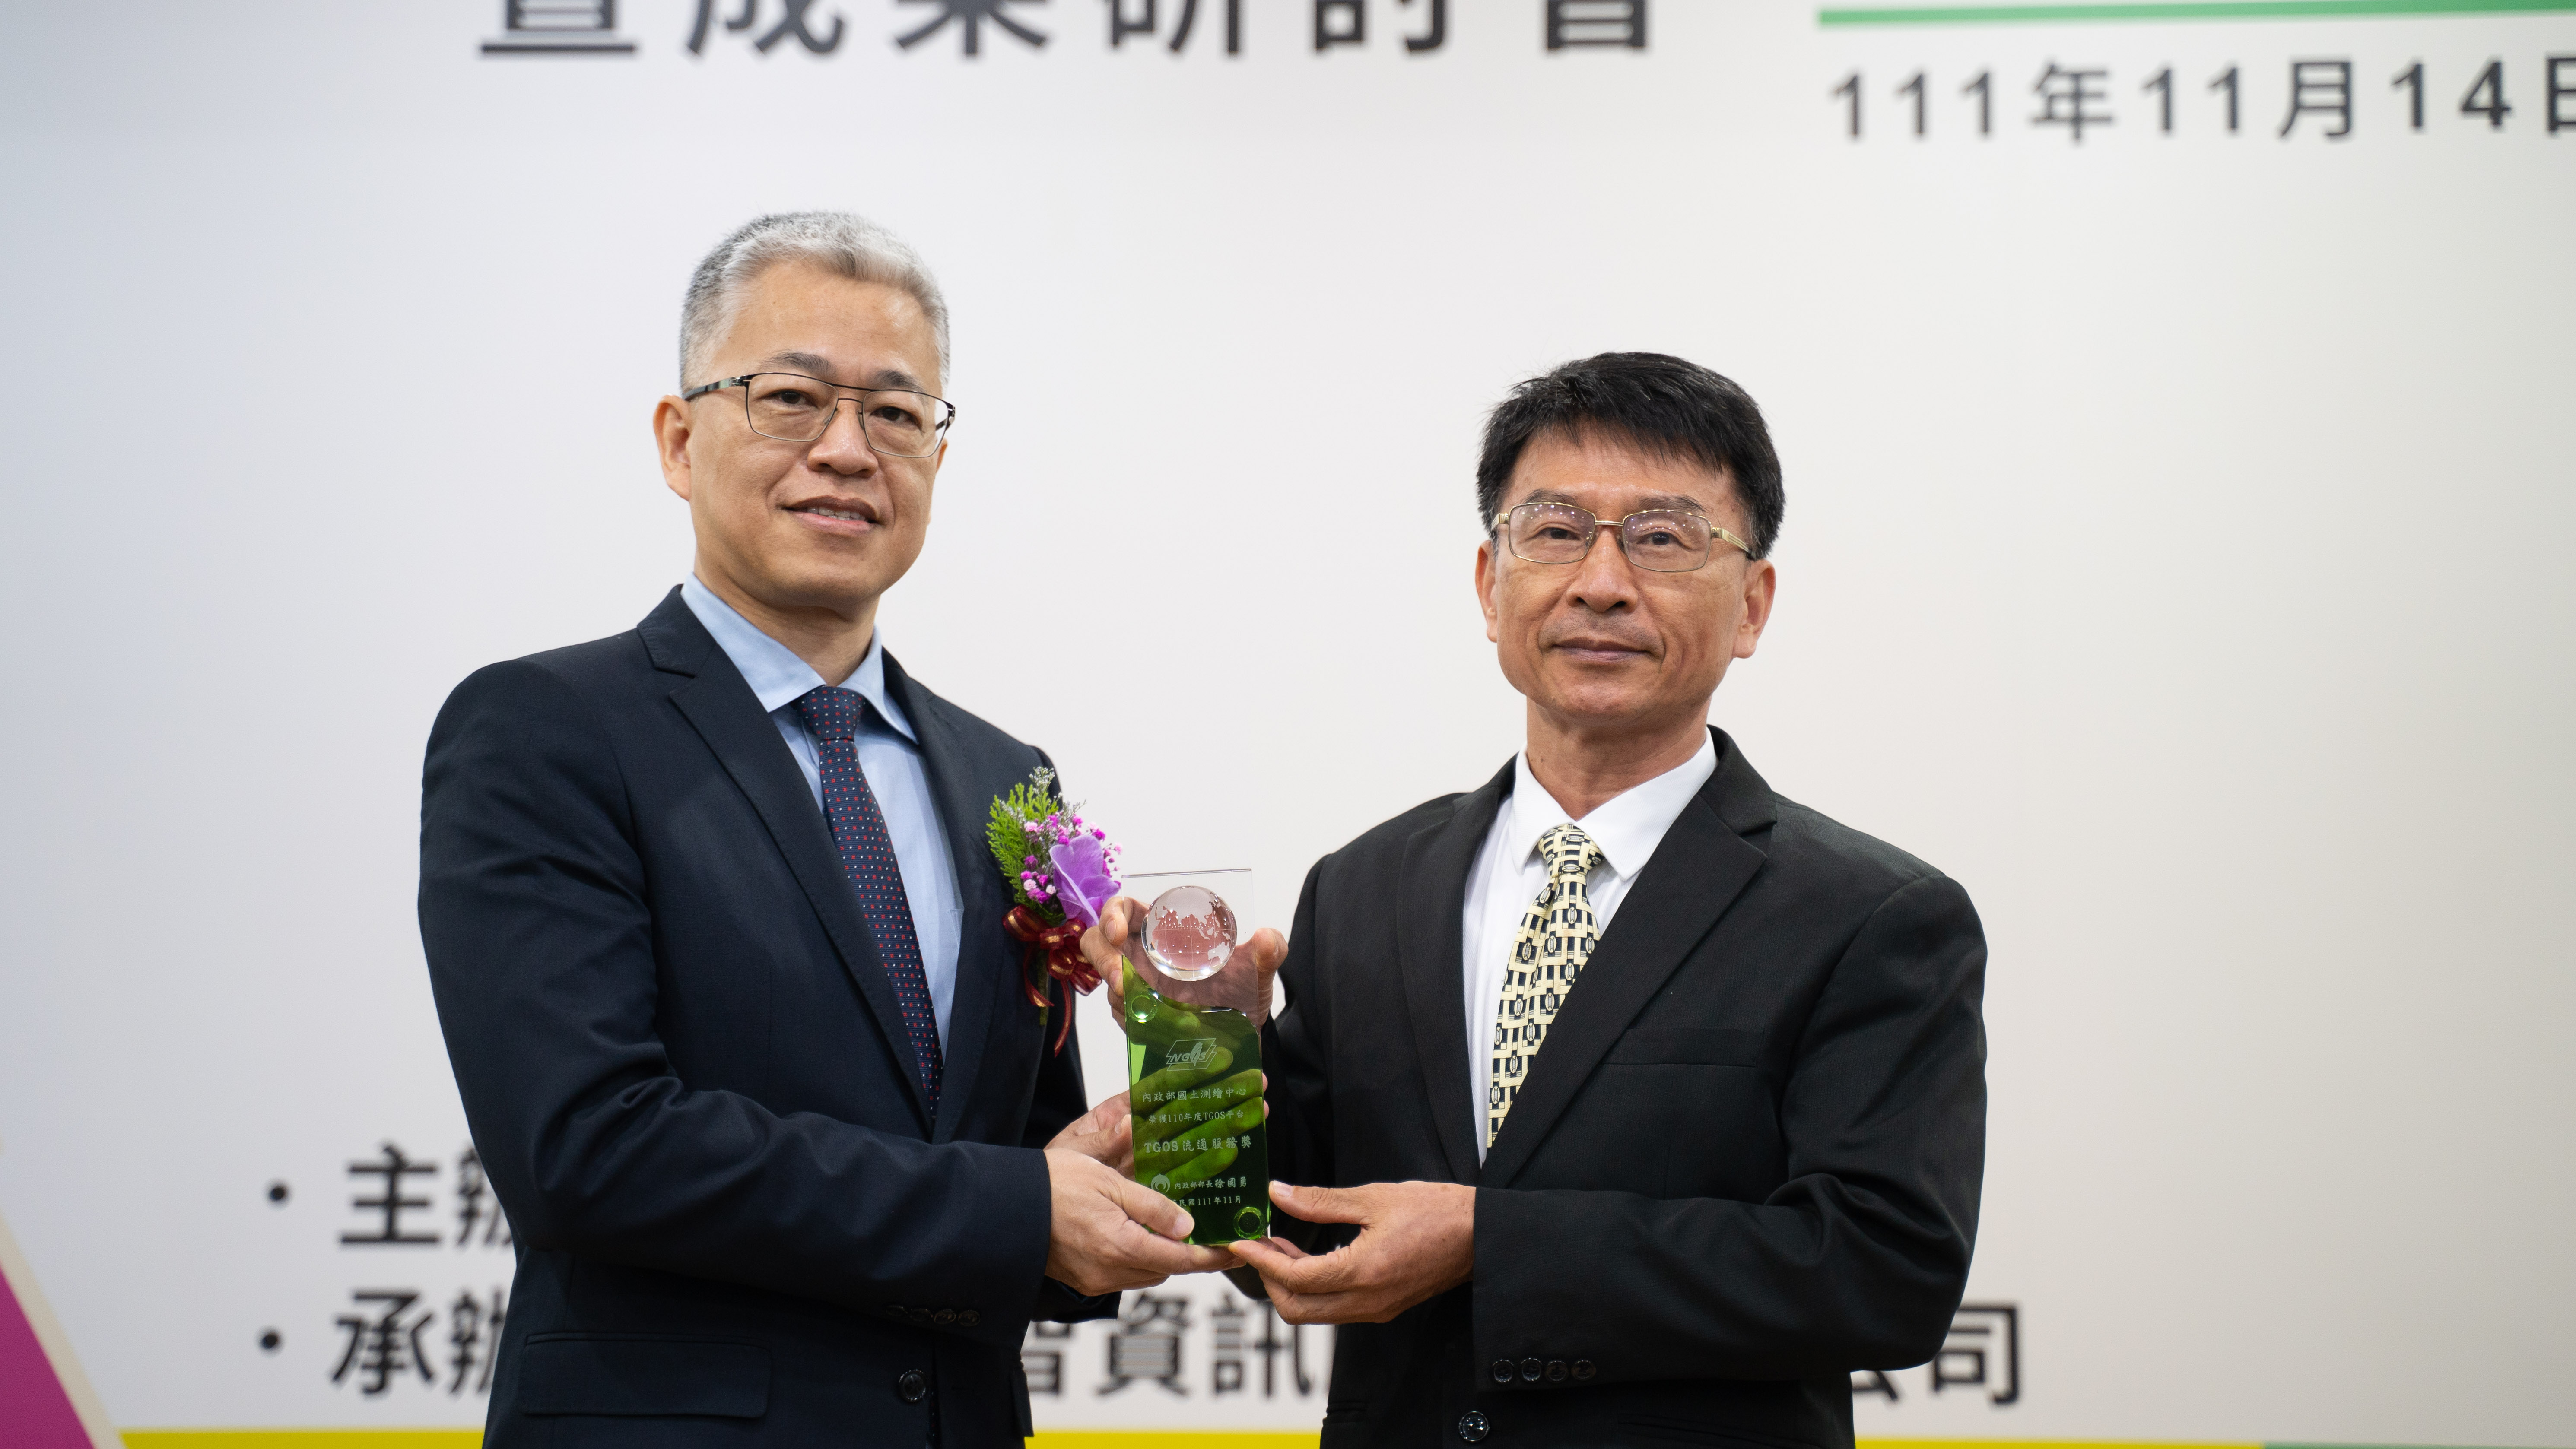 Wu Tang-An, Administrative Deputy Minister, awards the medal “TGOS Circulation Service” to Cheng Tsai-Tang , the Director of NLSC